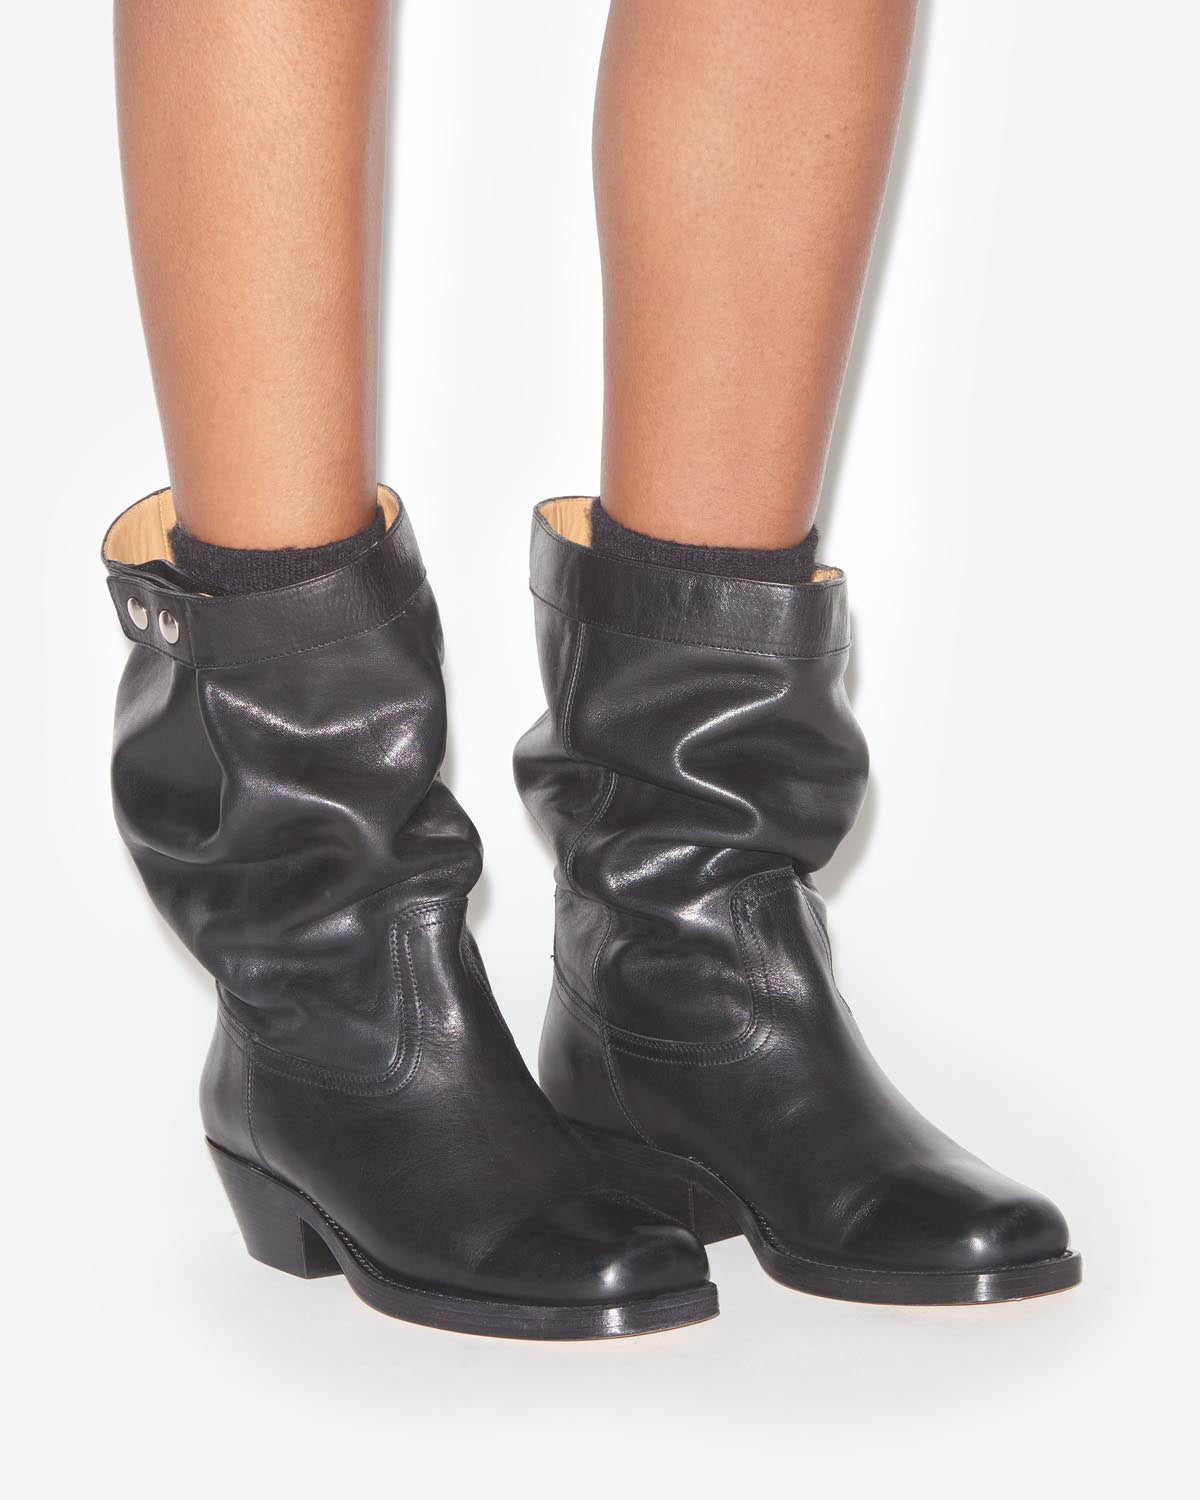 Boots ademe Woman Noir 3